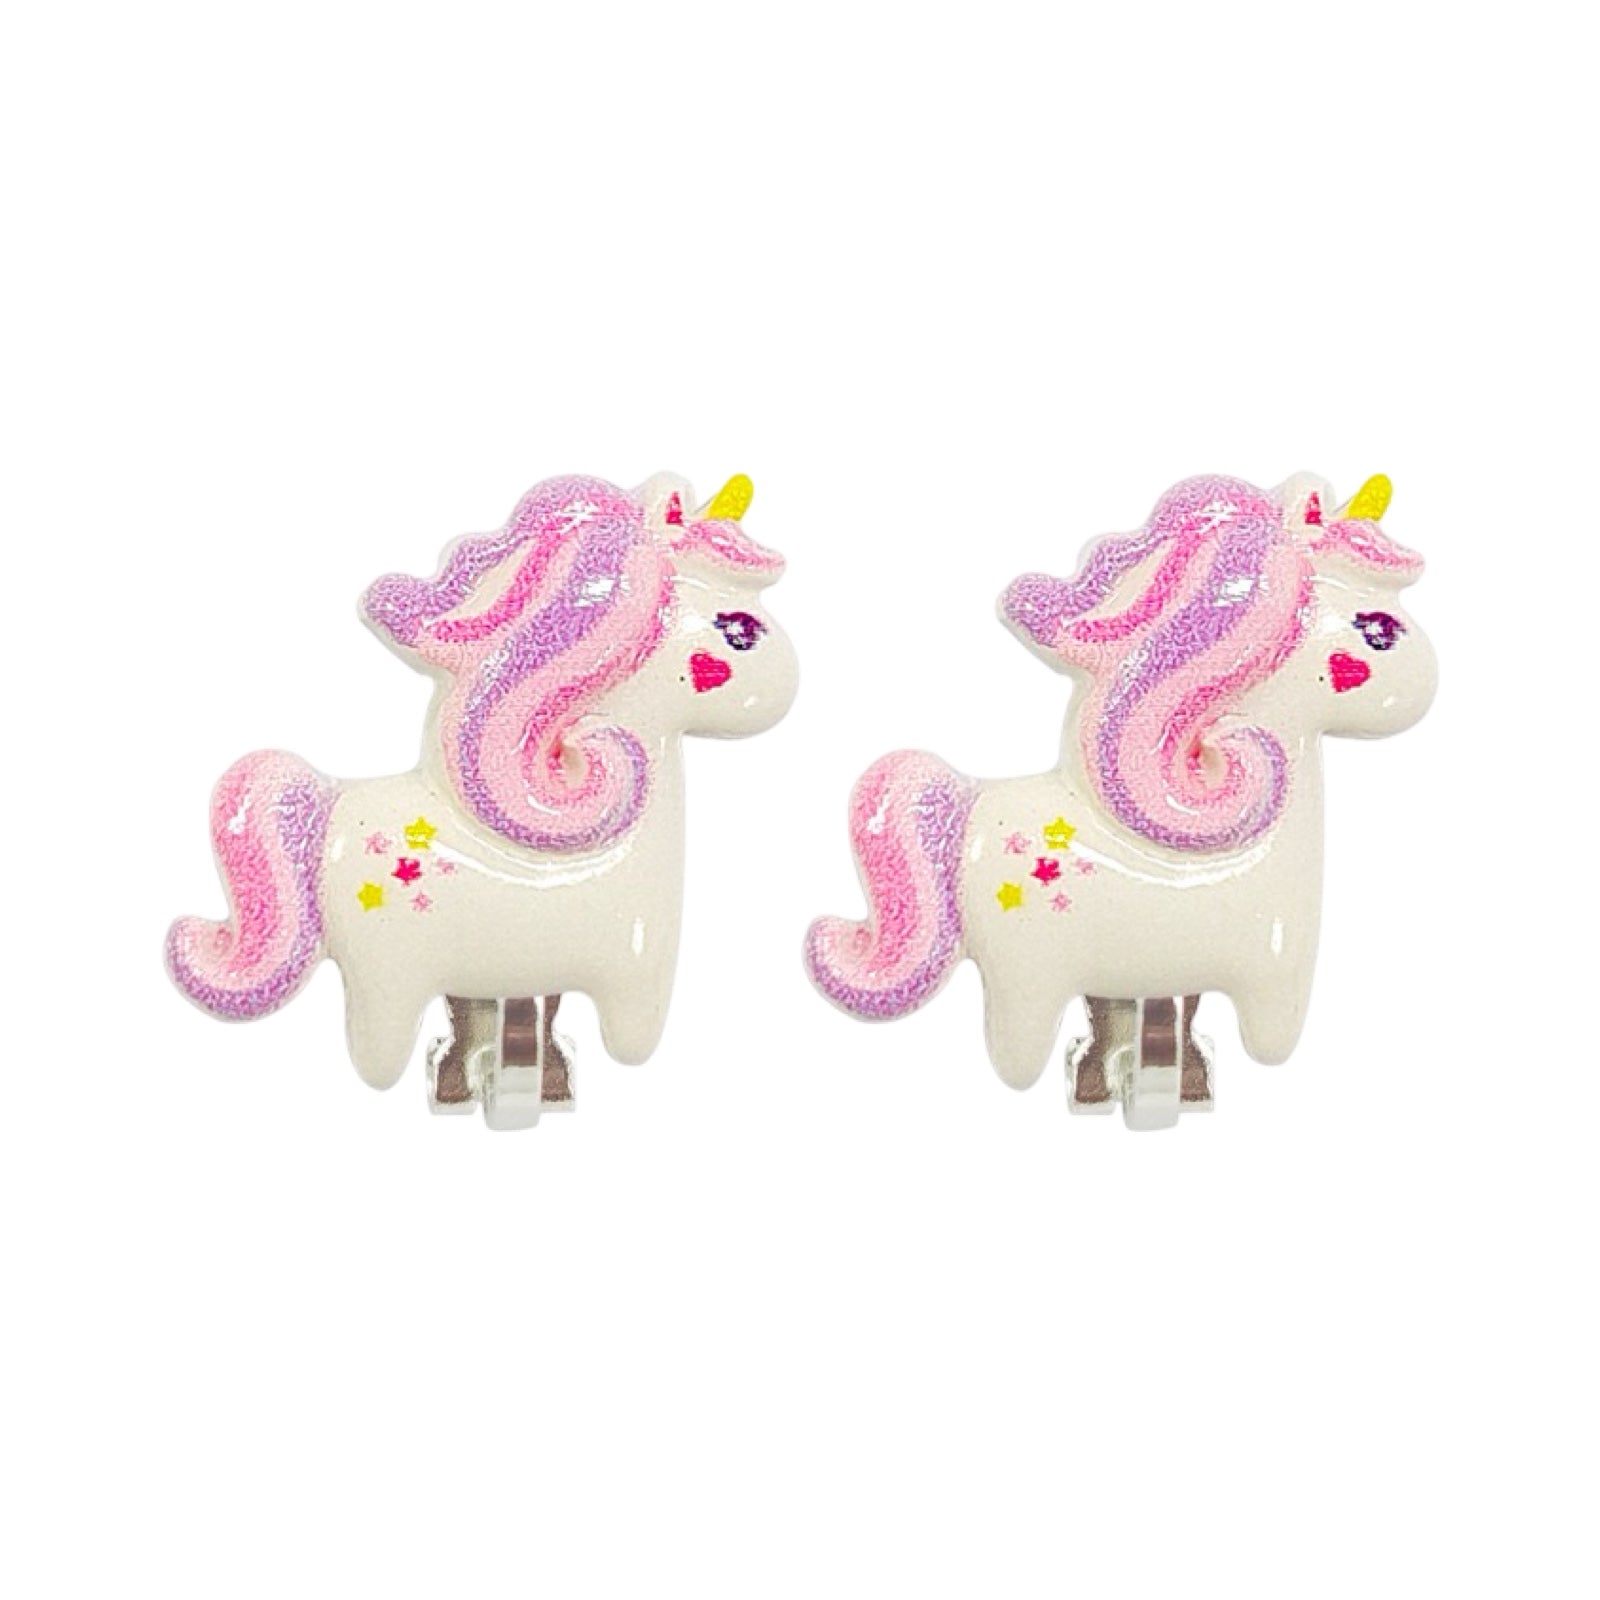 Clip earrings: Pink/white unicorns